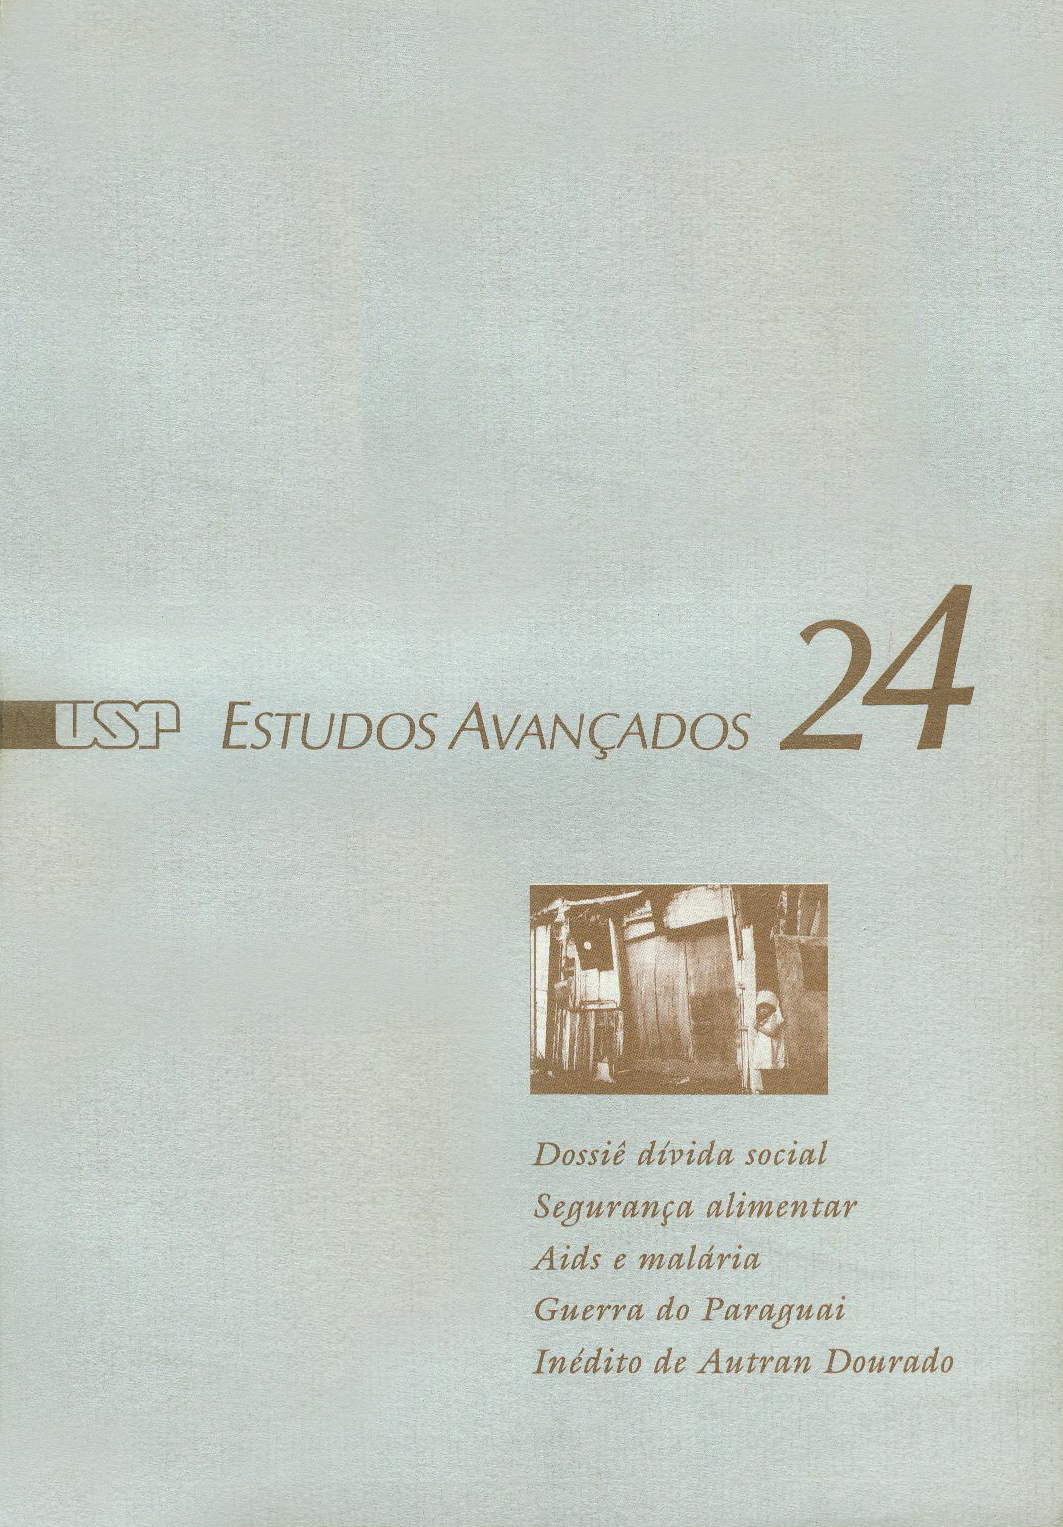 					Visualizar v. 9 n. 24 (1995)
				